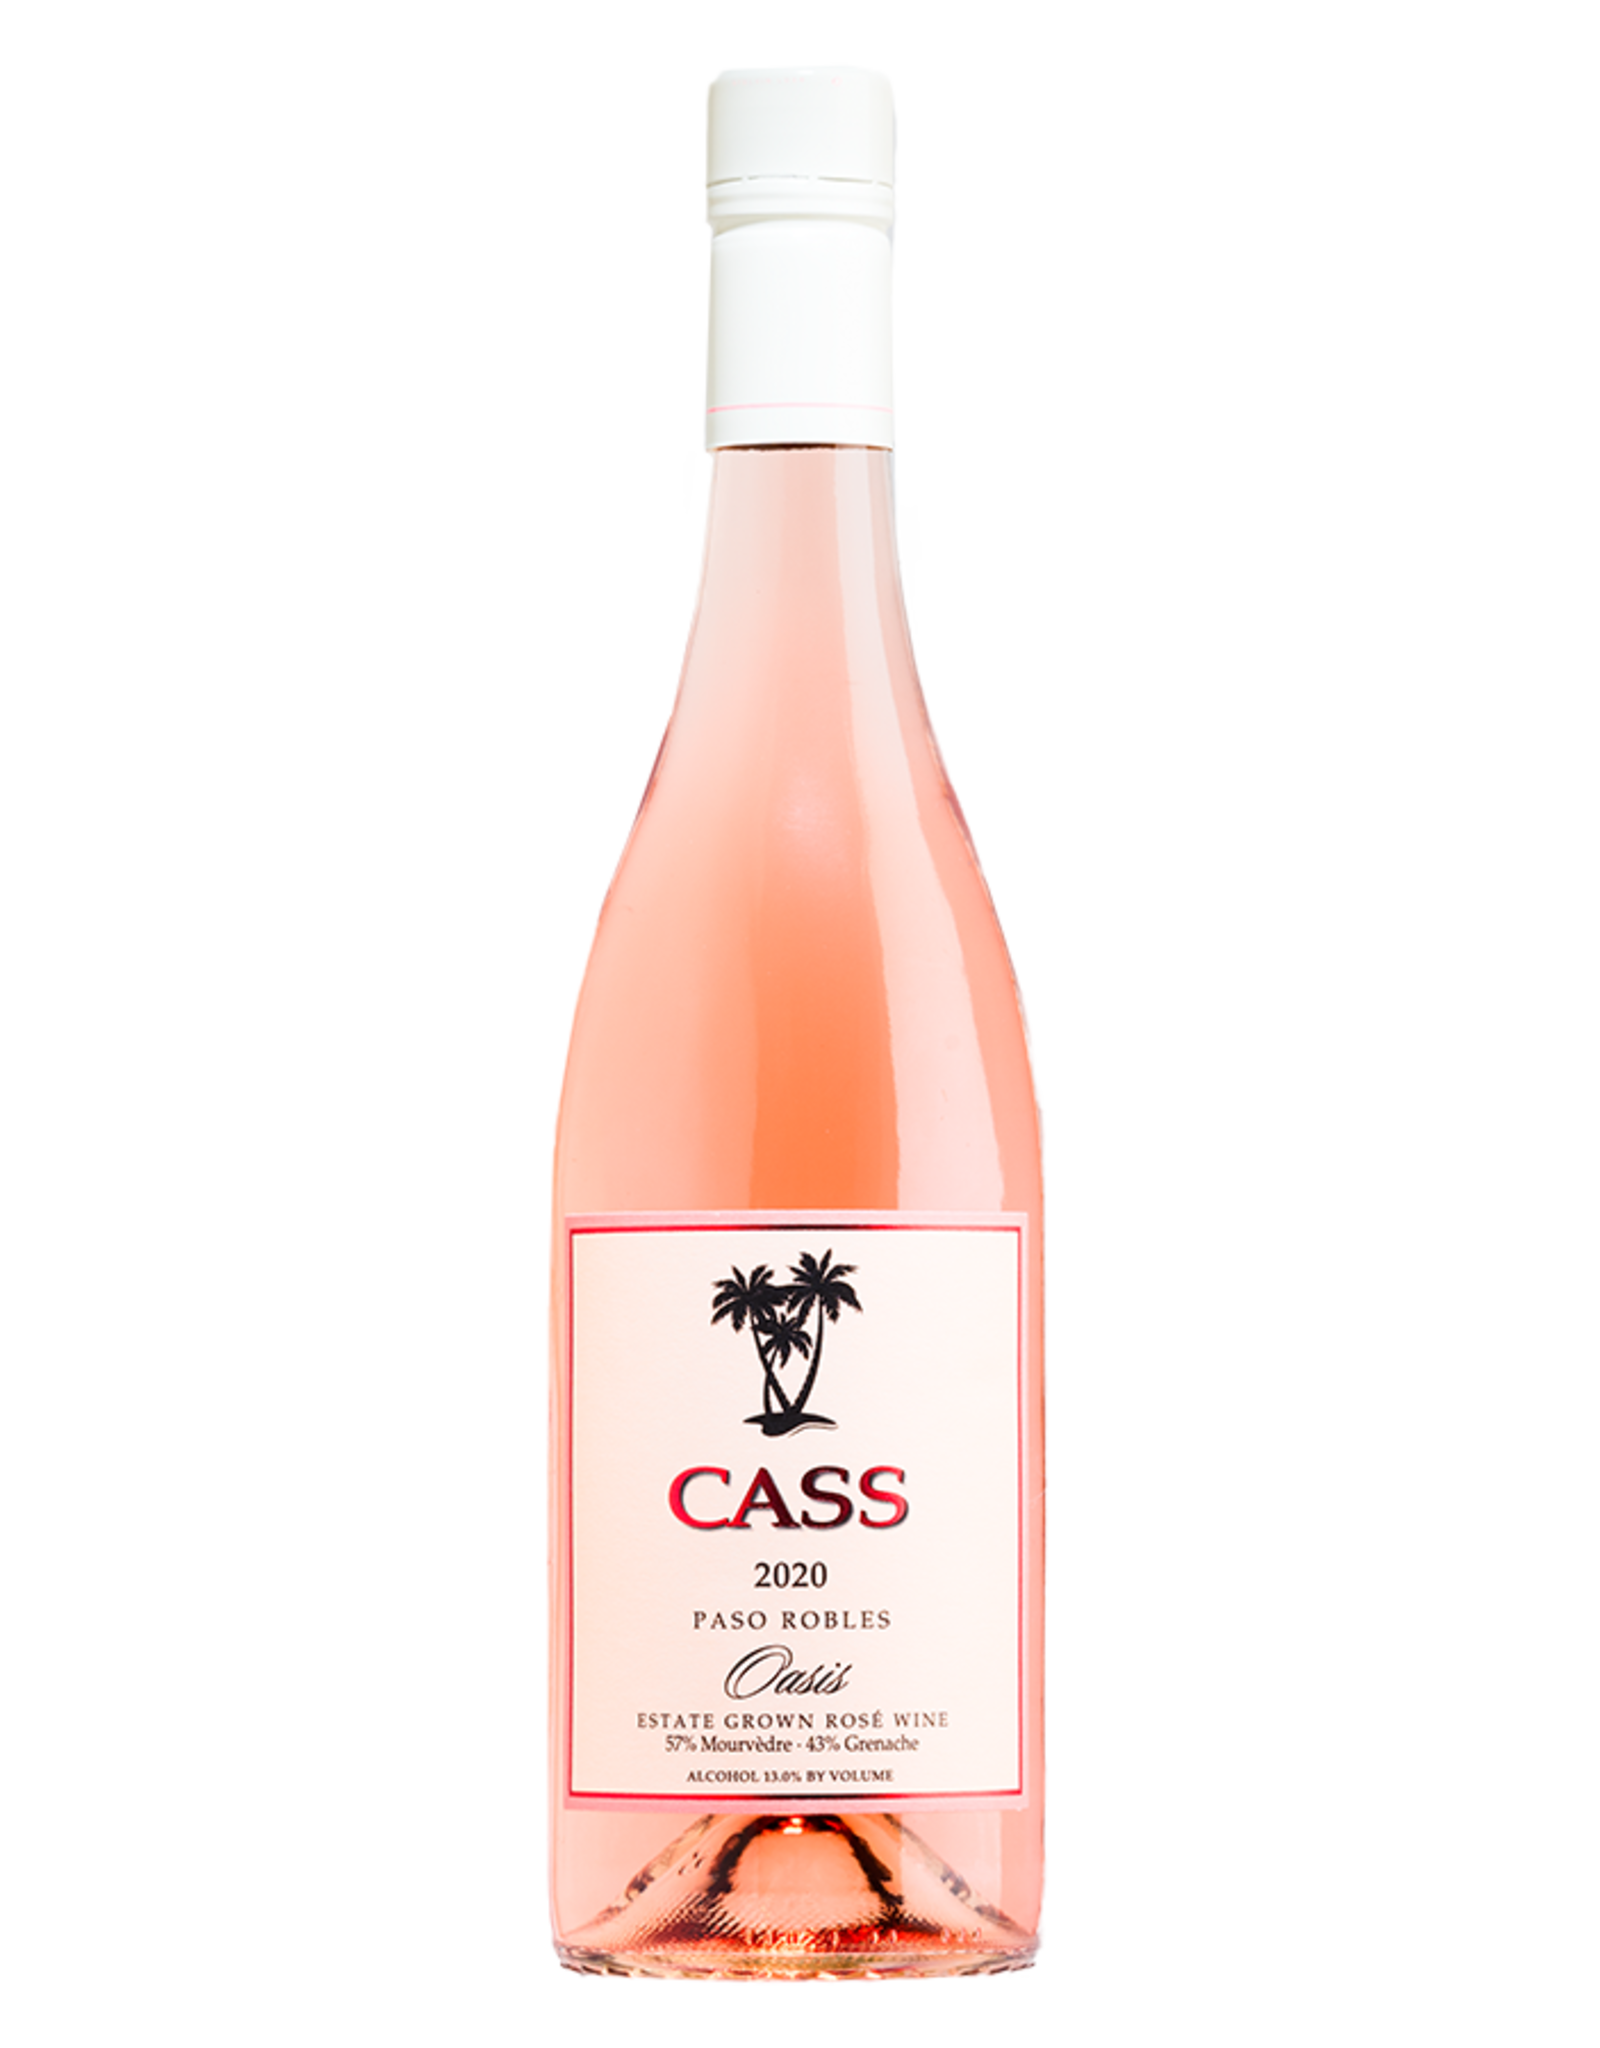 Cass Cass "Oasis" Rosé, Paso Robles 2020